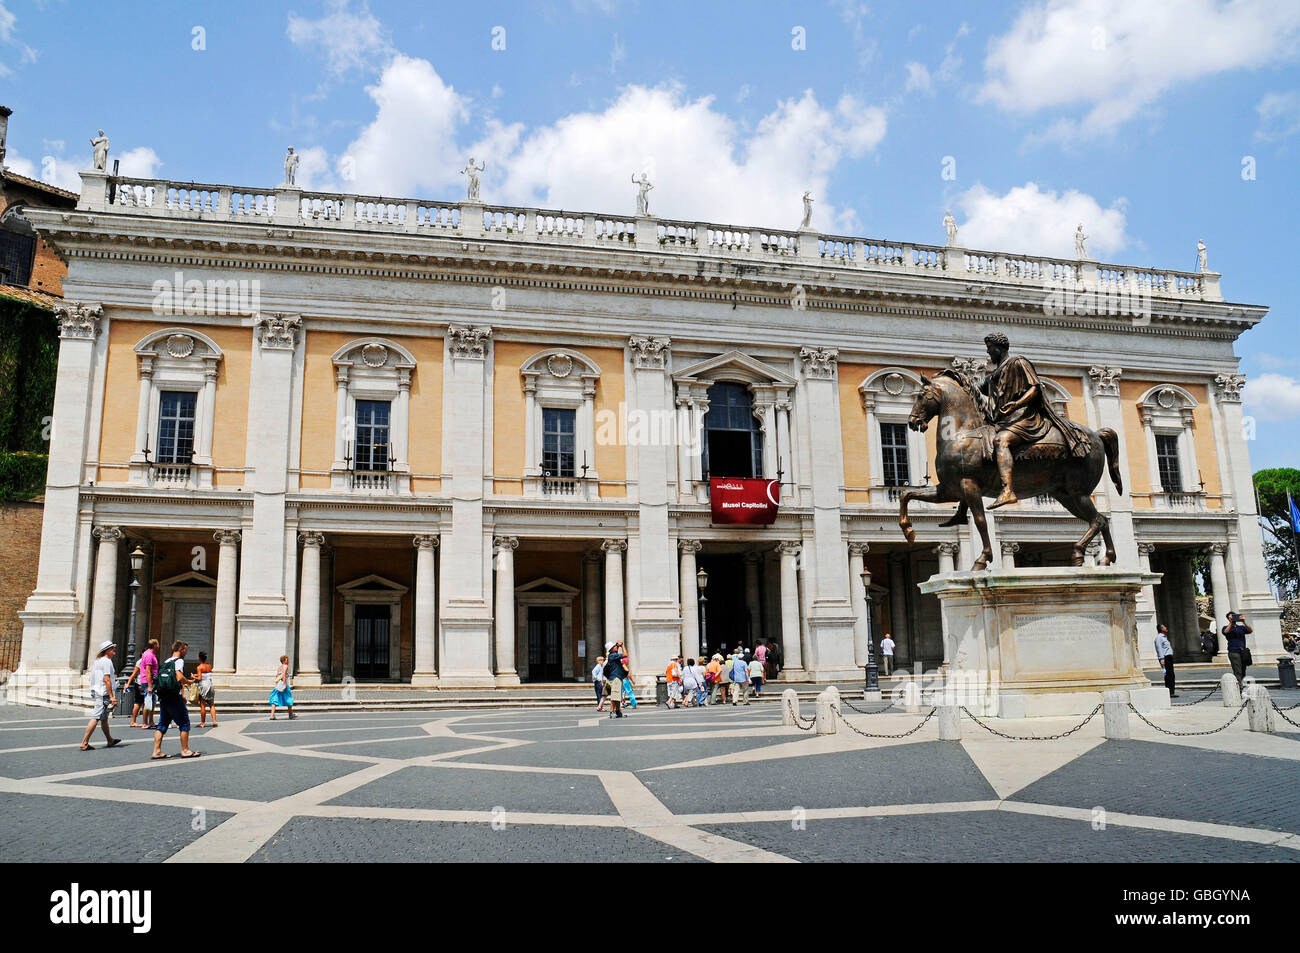 Musei Capitolini, Musées du Capitole, le musée, la Piazza del Campidoglio, square, Rome, Latium, Italie Banque D'Images